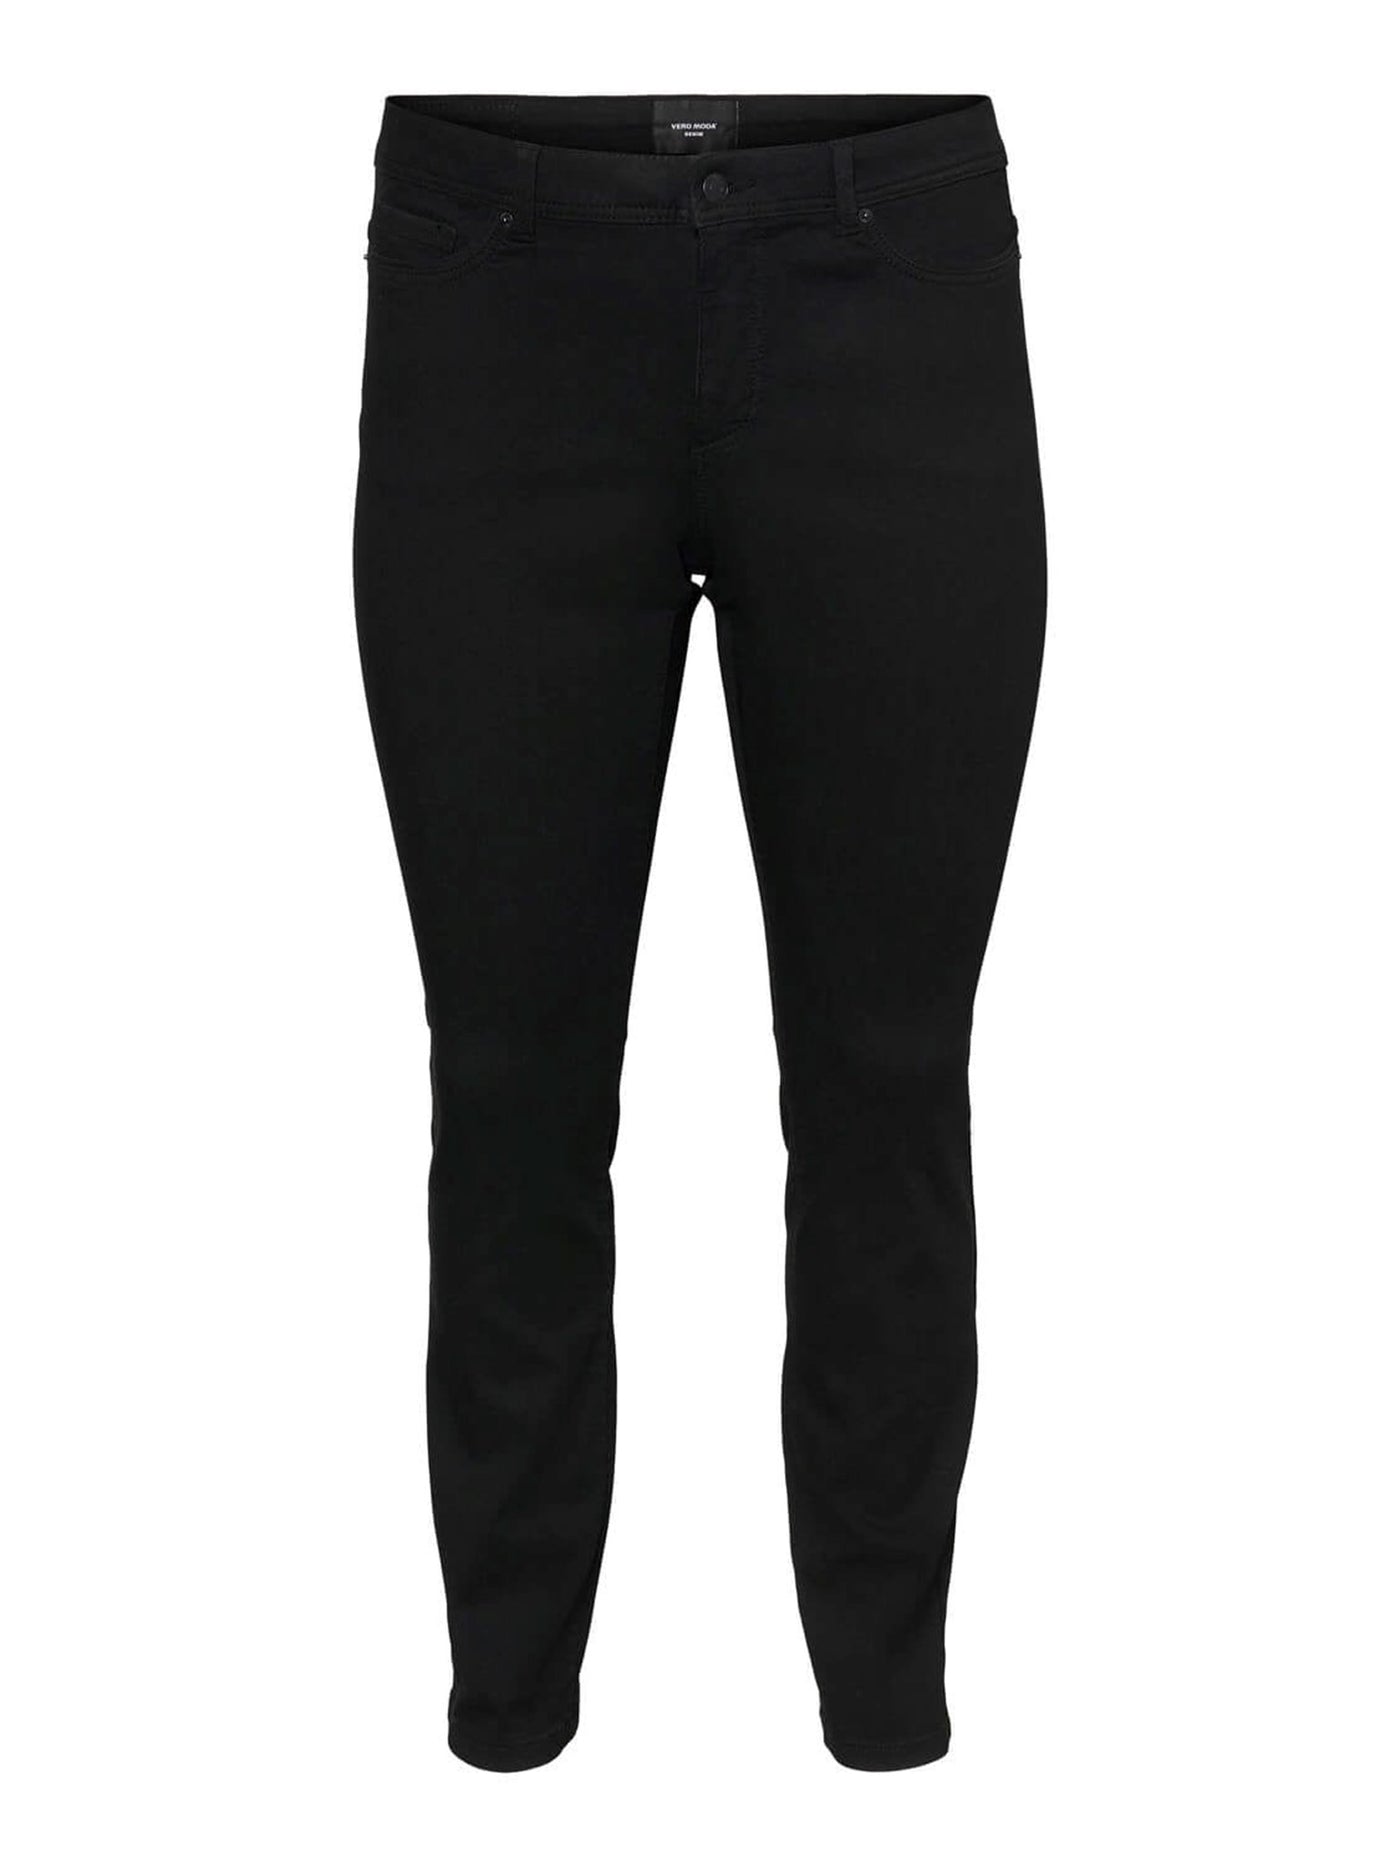 Manya Jeans (Curve) - Black - Vero Moda Curve - Black 3